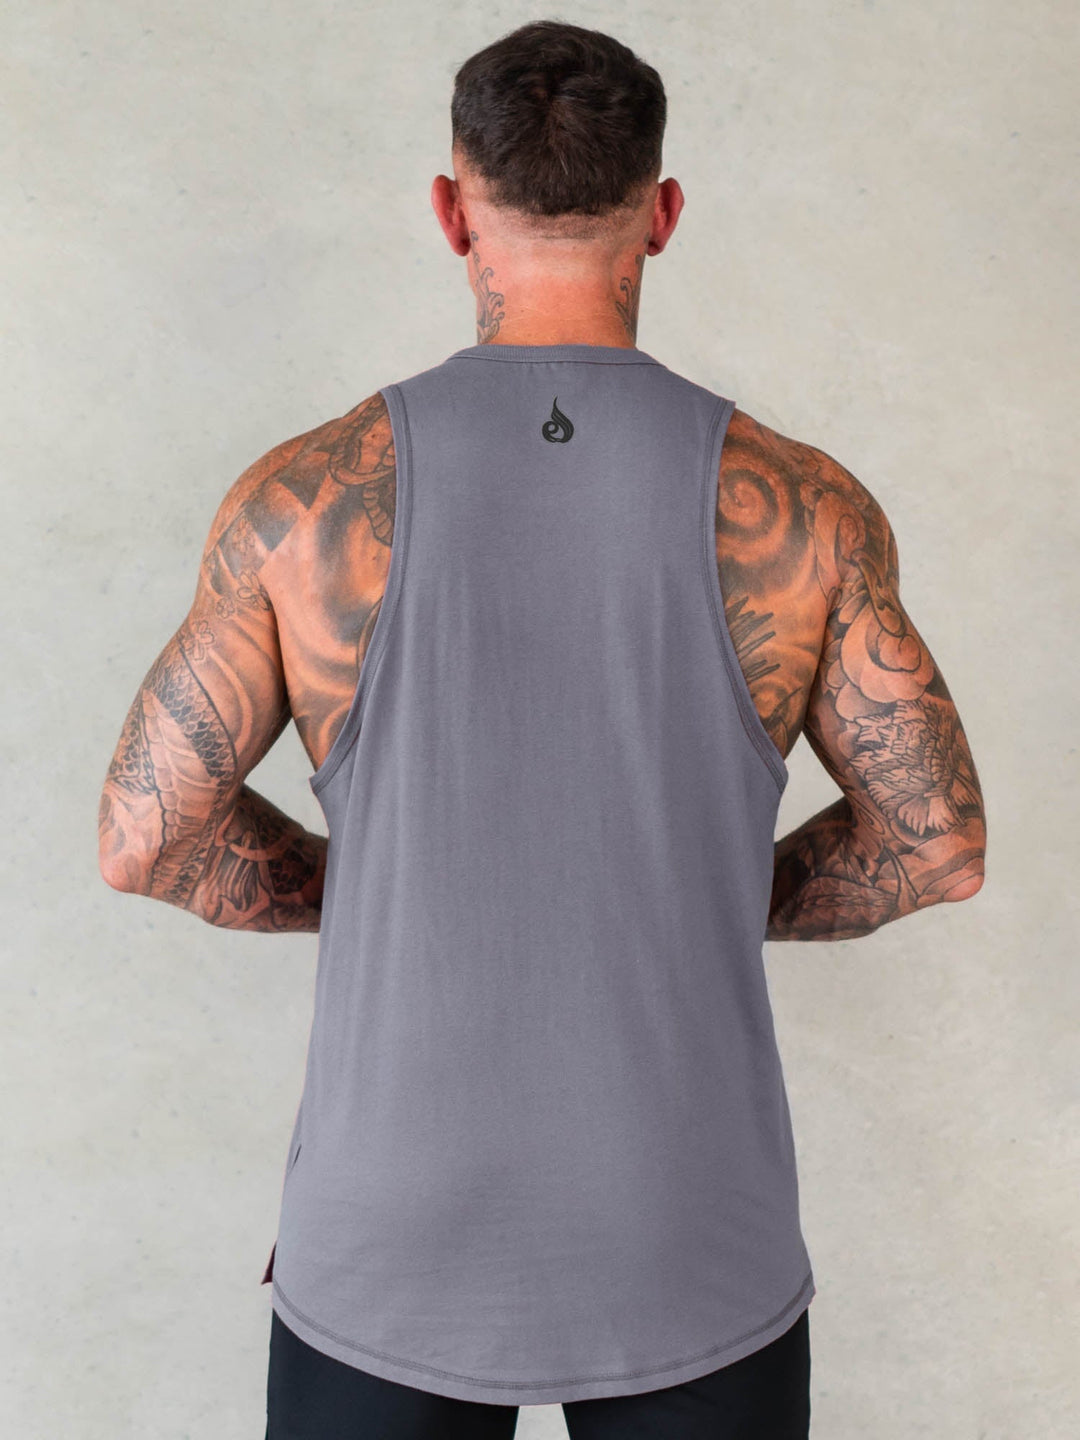 Octane Tank - Steel Grey Clothing Ryderwear 